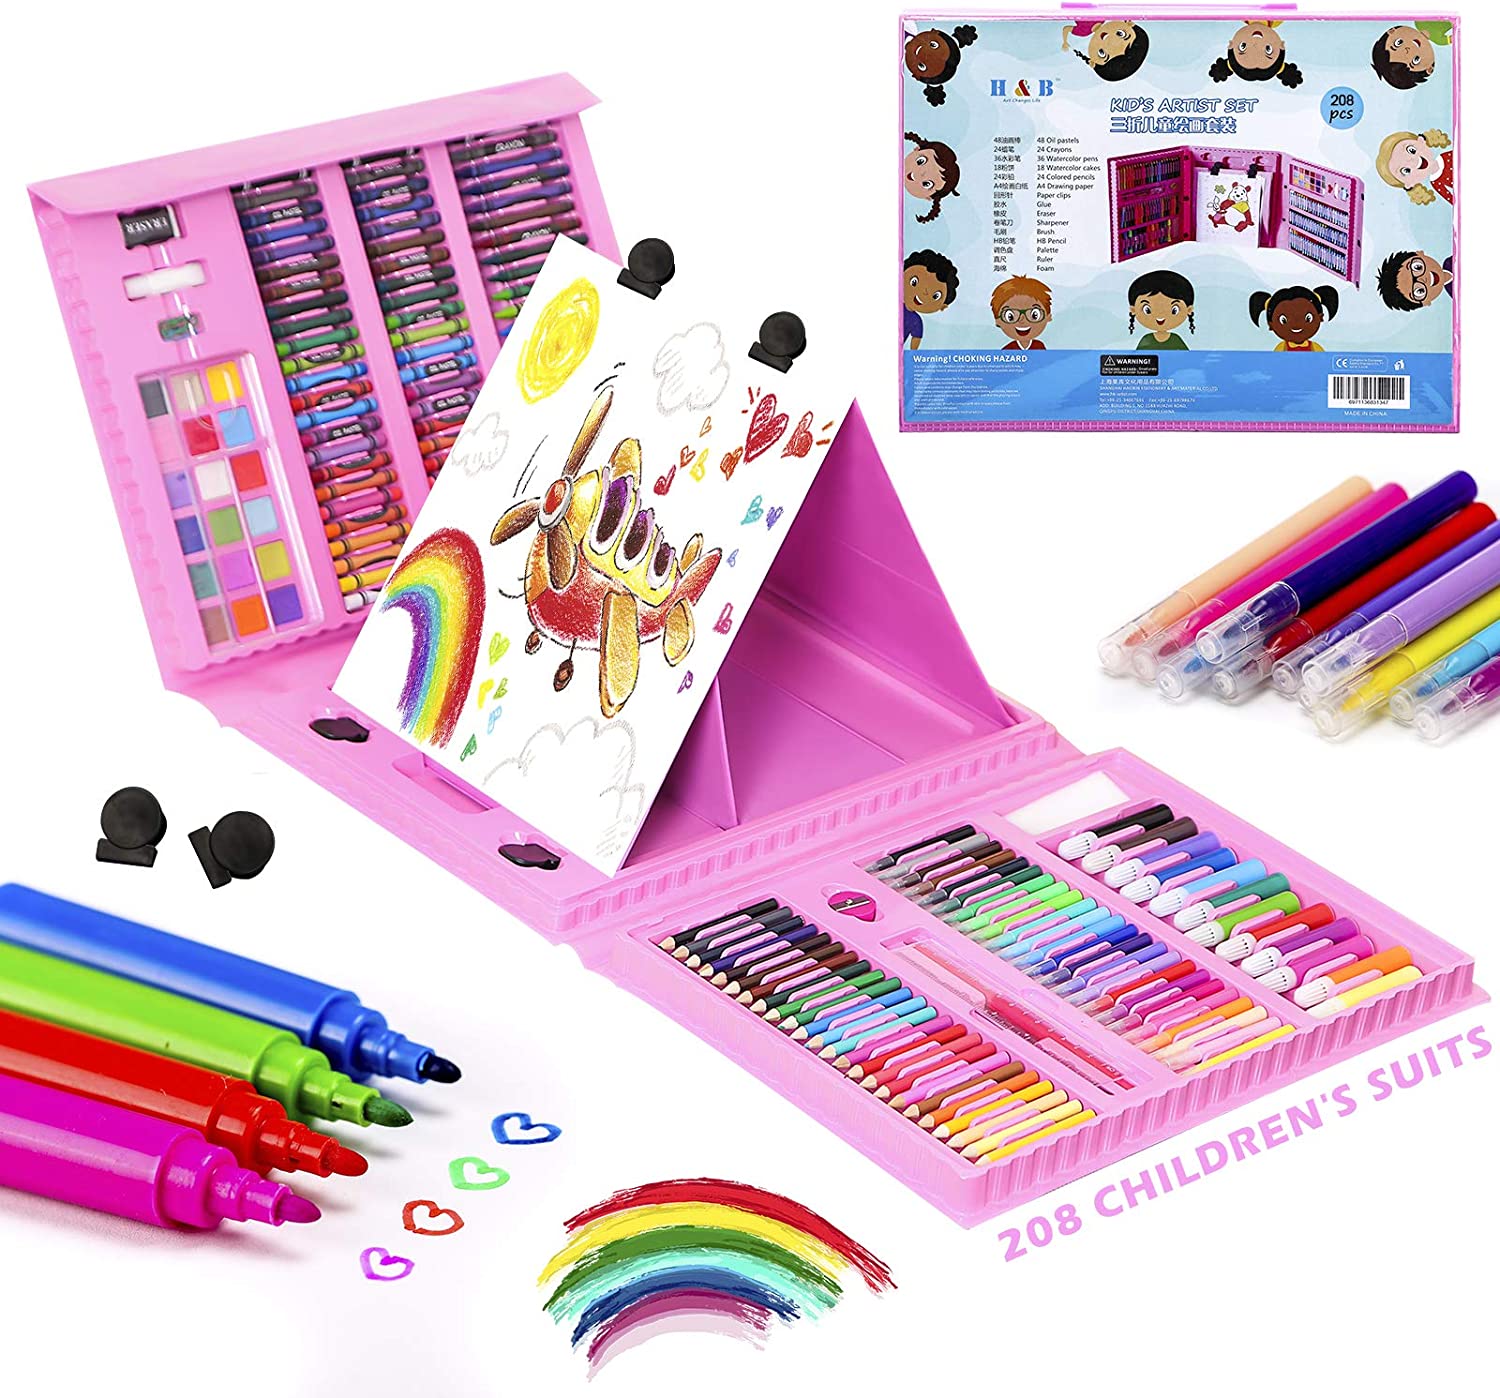 https://www.dontwasteyourmoney.com/wp-content/uploads/2020/07/h-b-portable-art-supply-kit-for-kids-208-piece.jpg